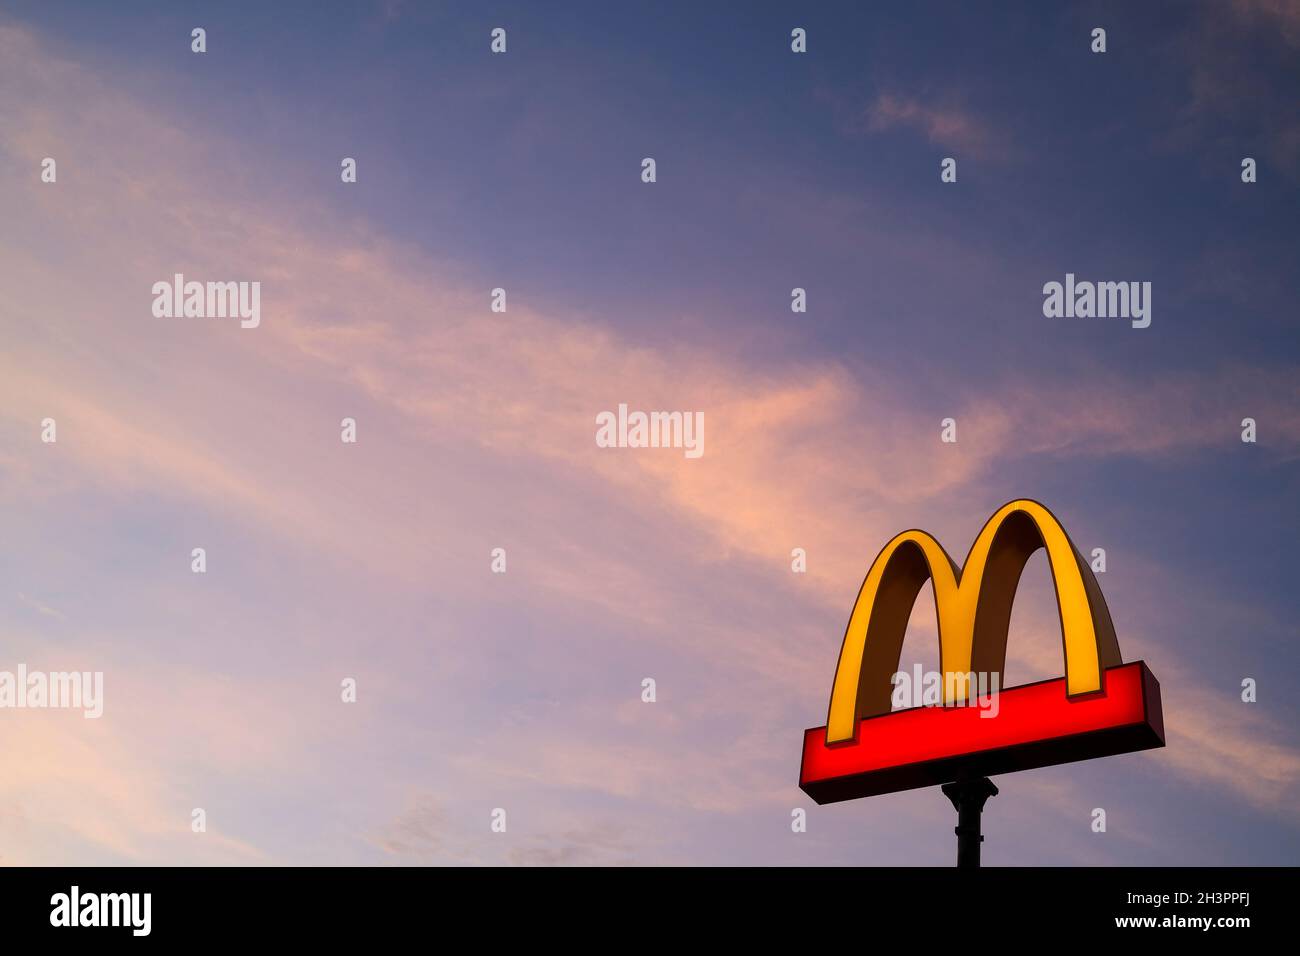 The MacDonald golden arches logo at sunset Stock Photo